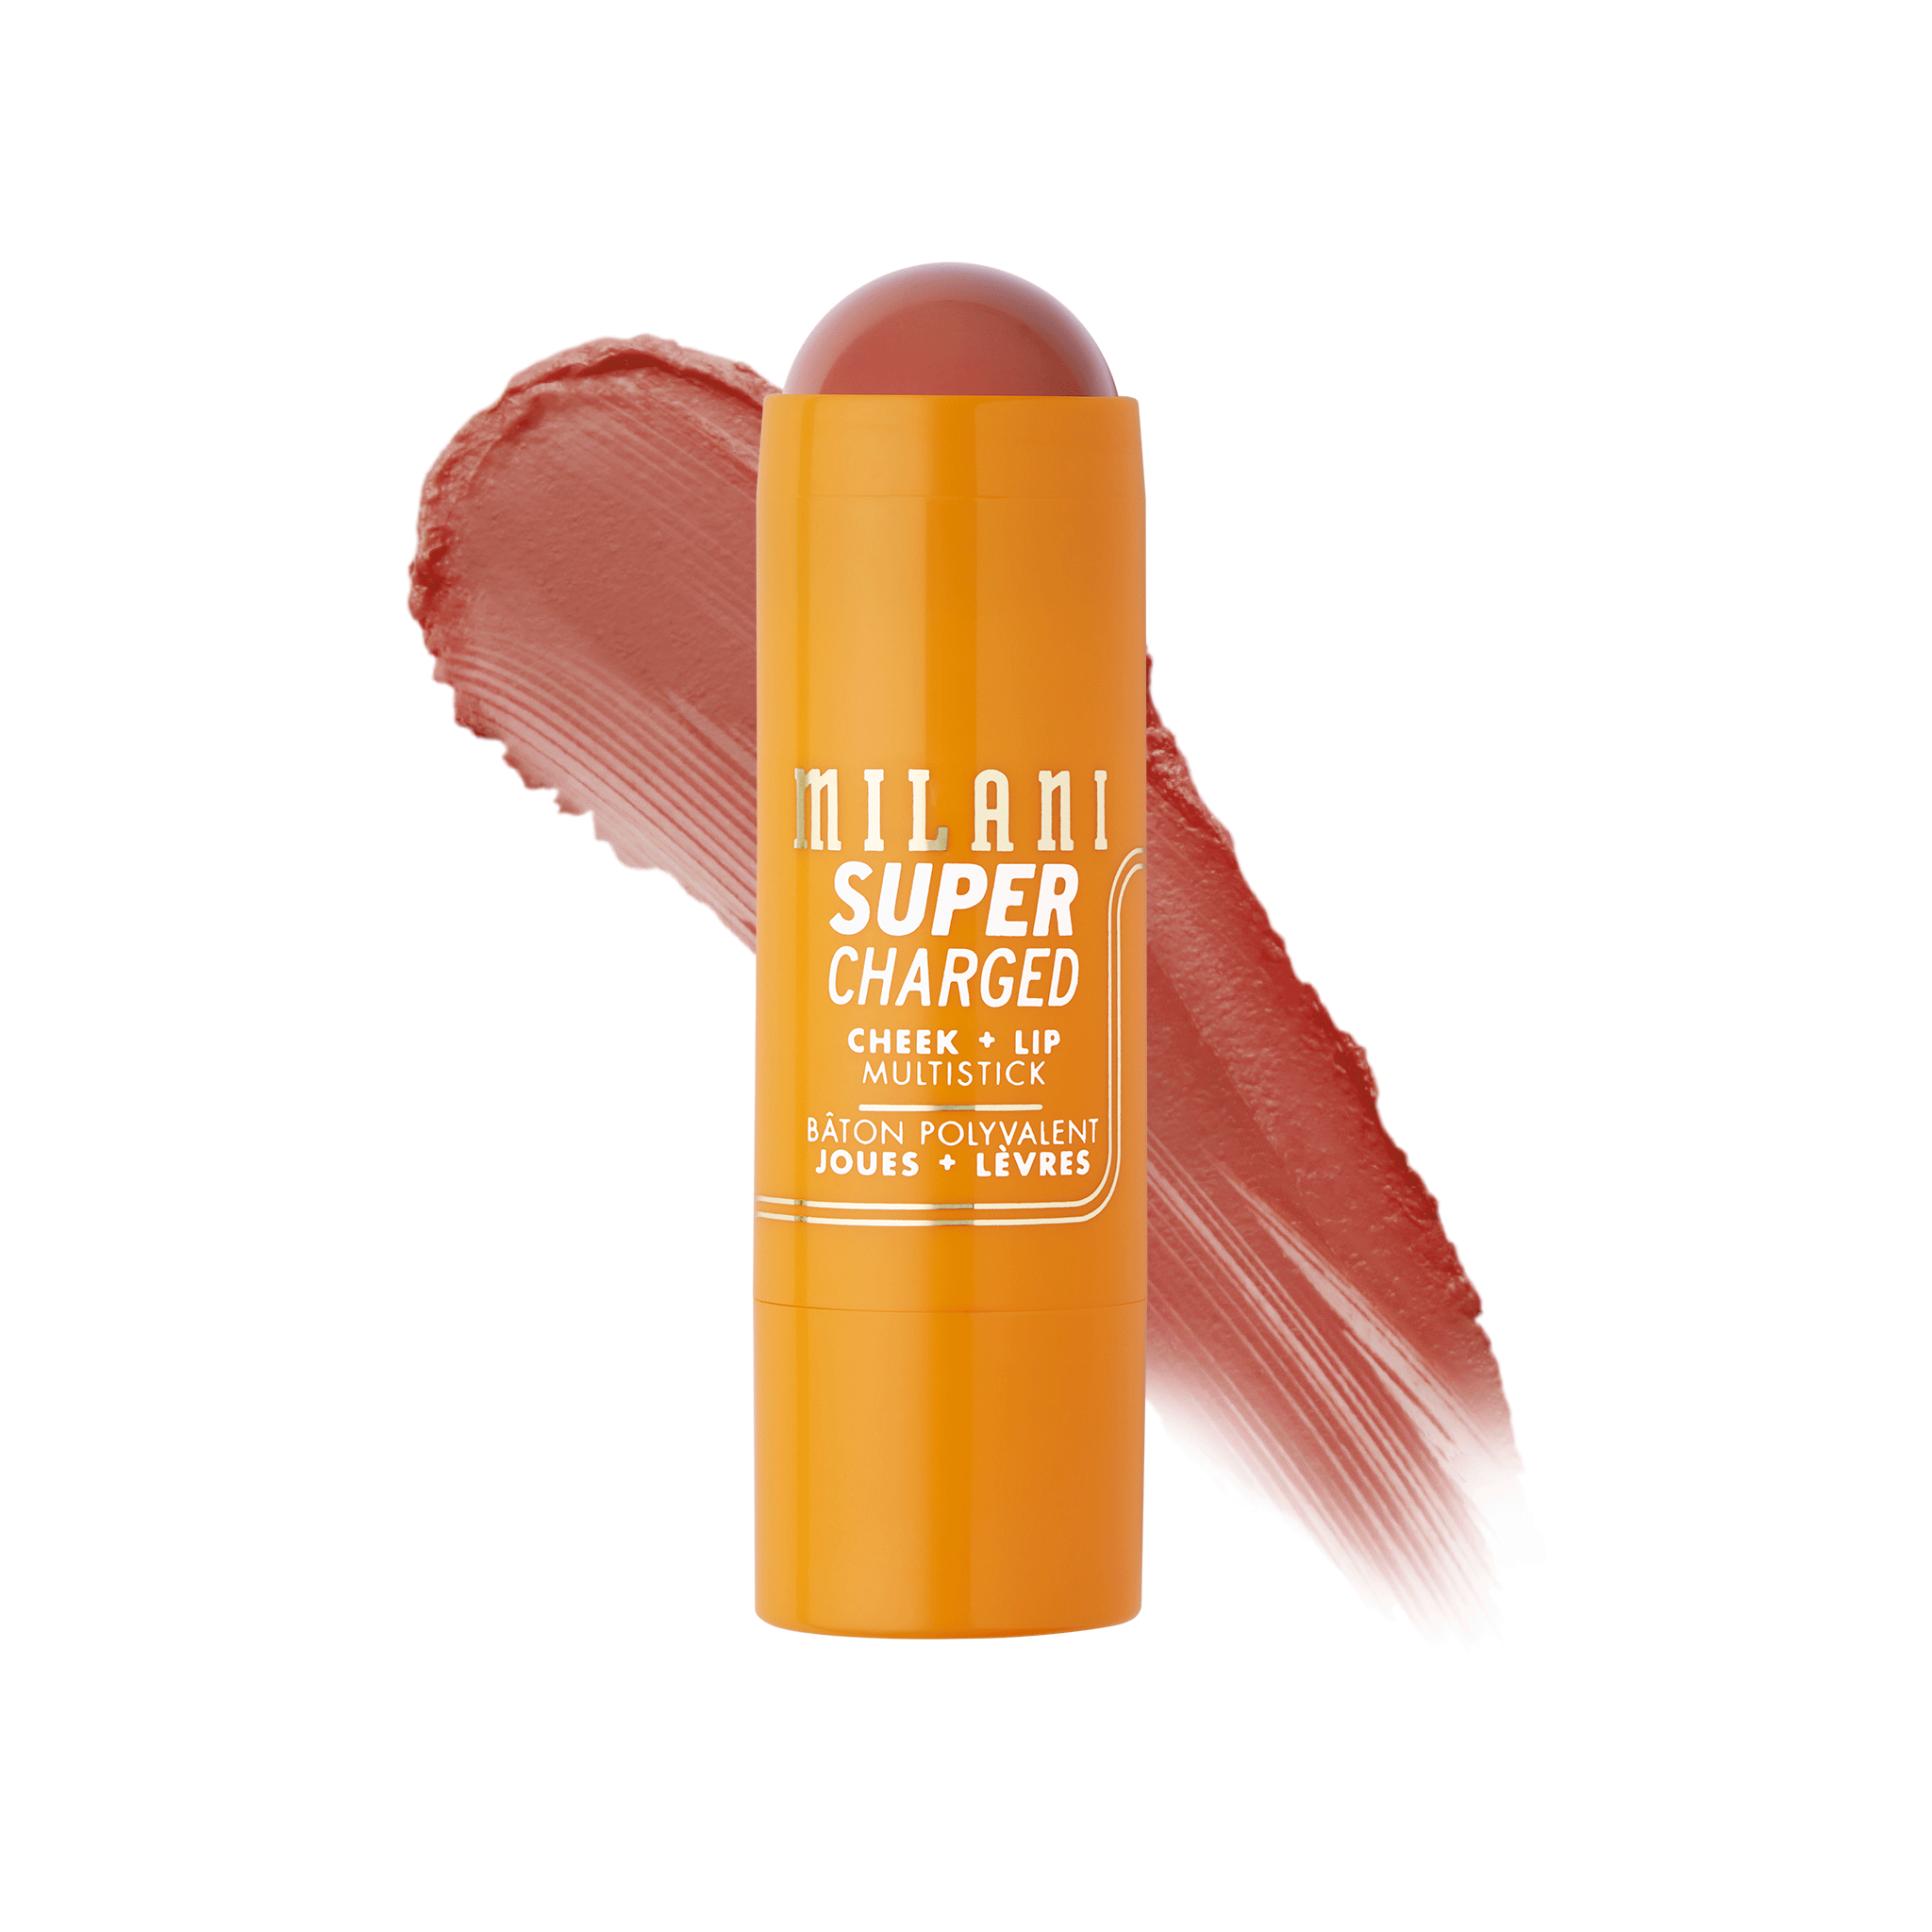 Läs mer om Milani Supercharged Cheek+Lip Multistick Spice Jolt